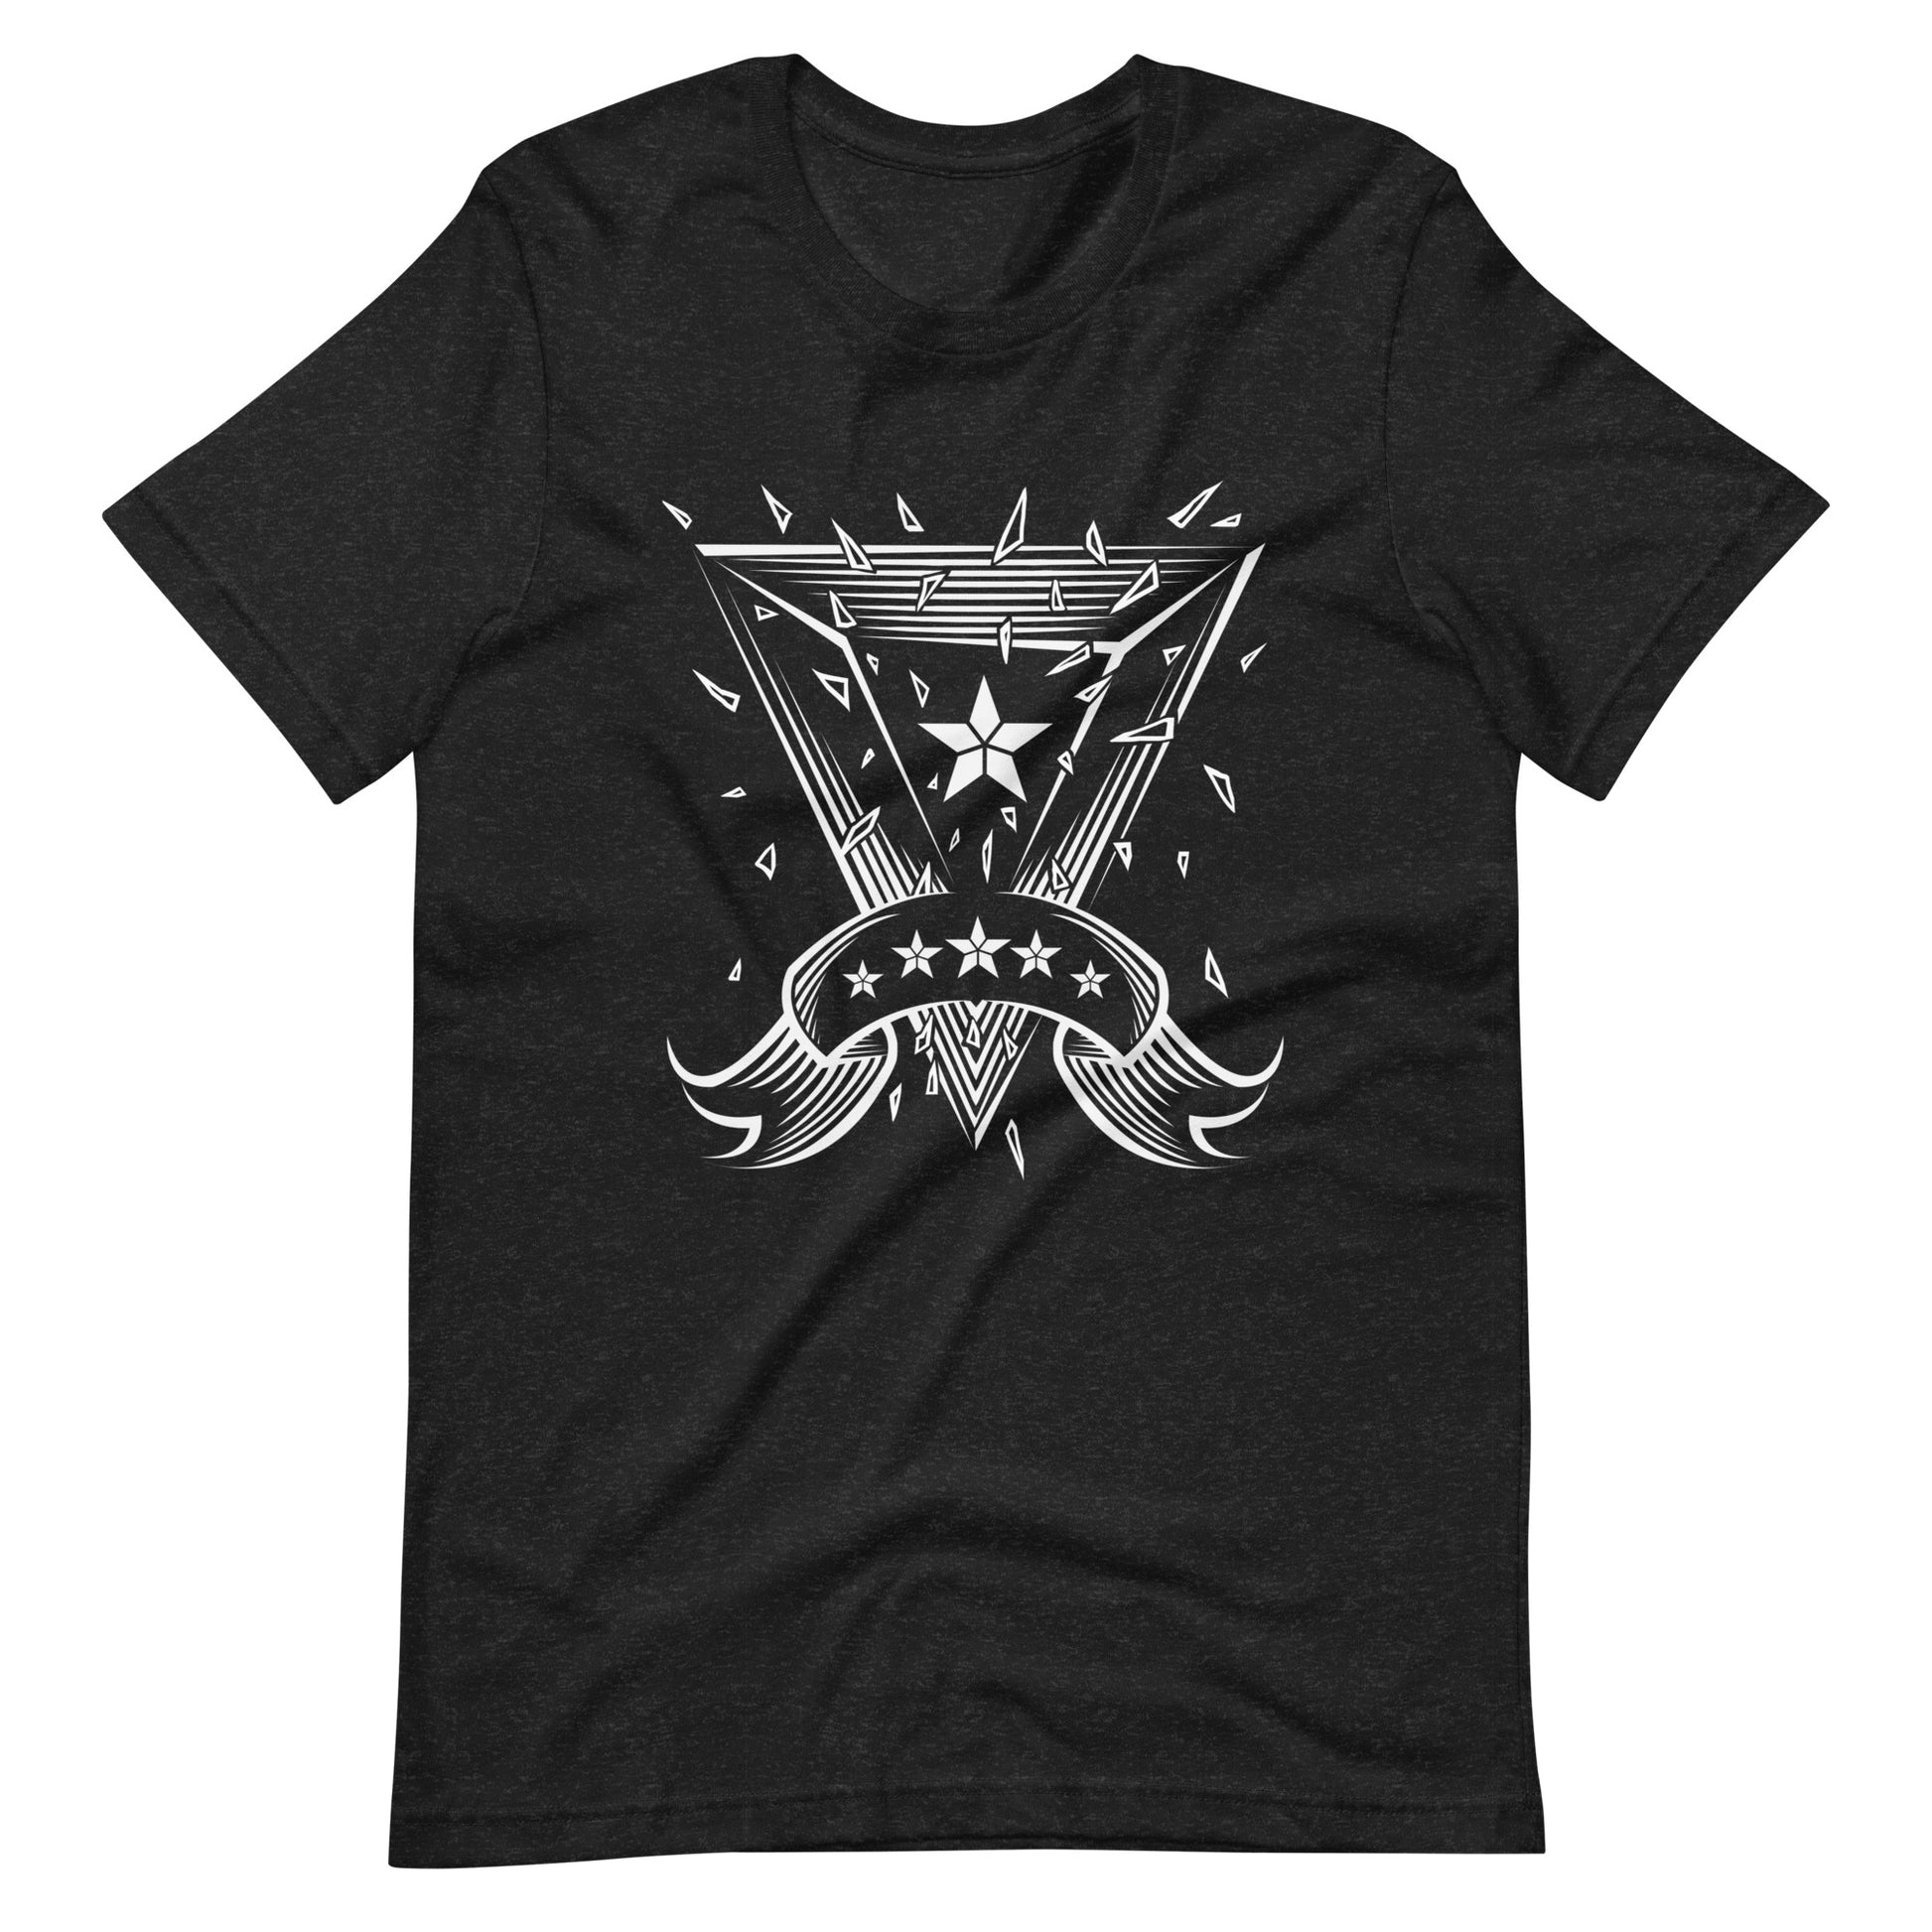 Starlight - Men's t-shirt - Black Heather Front